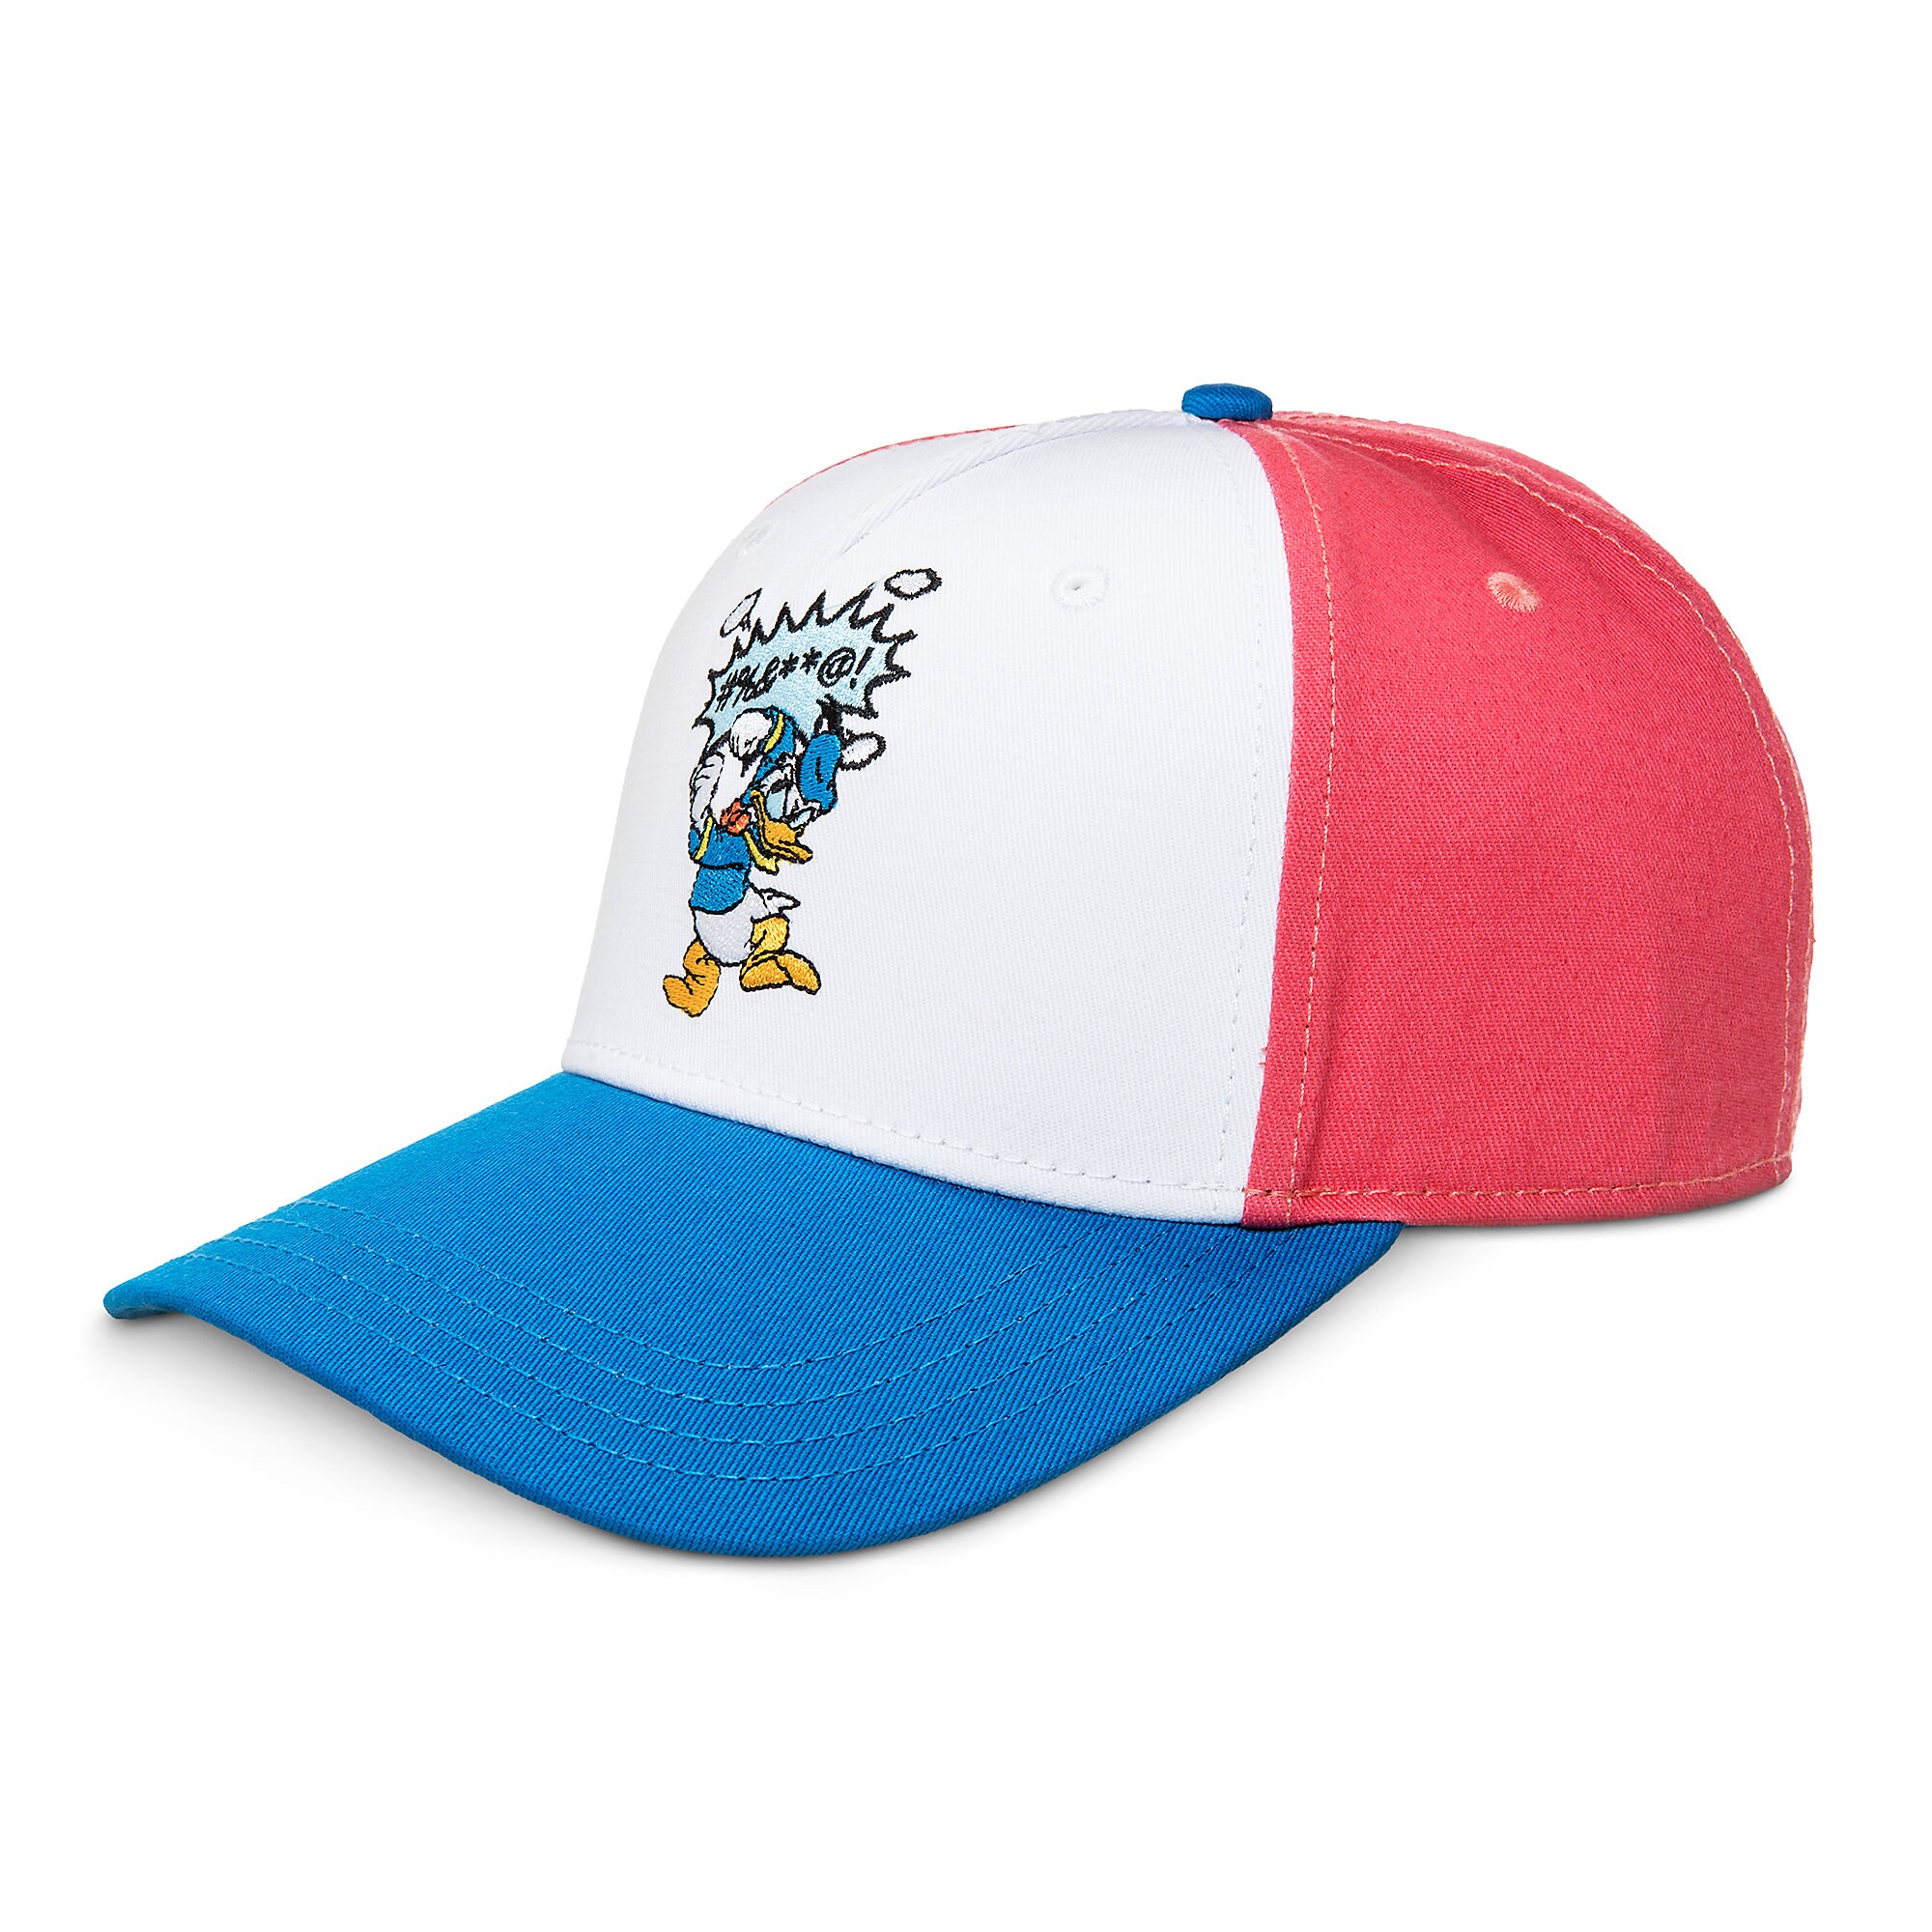 Donald Duck Baseball Cap for Adults